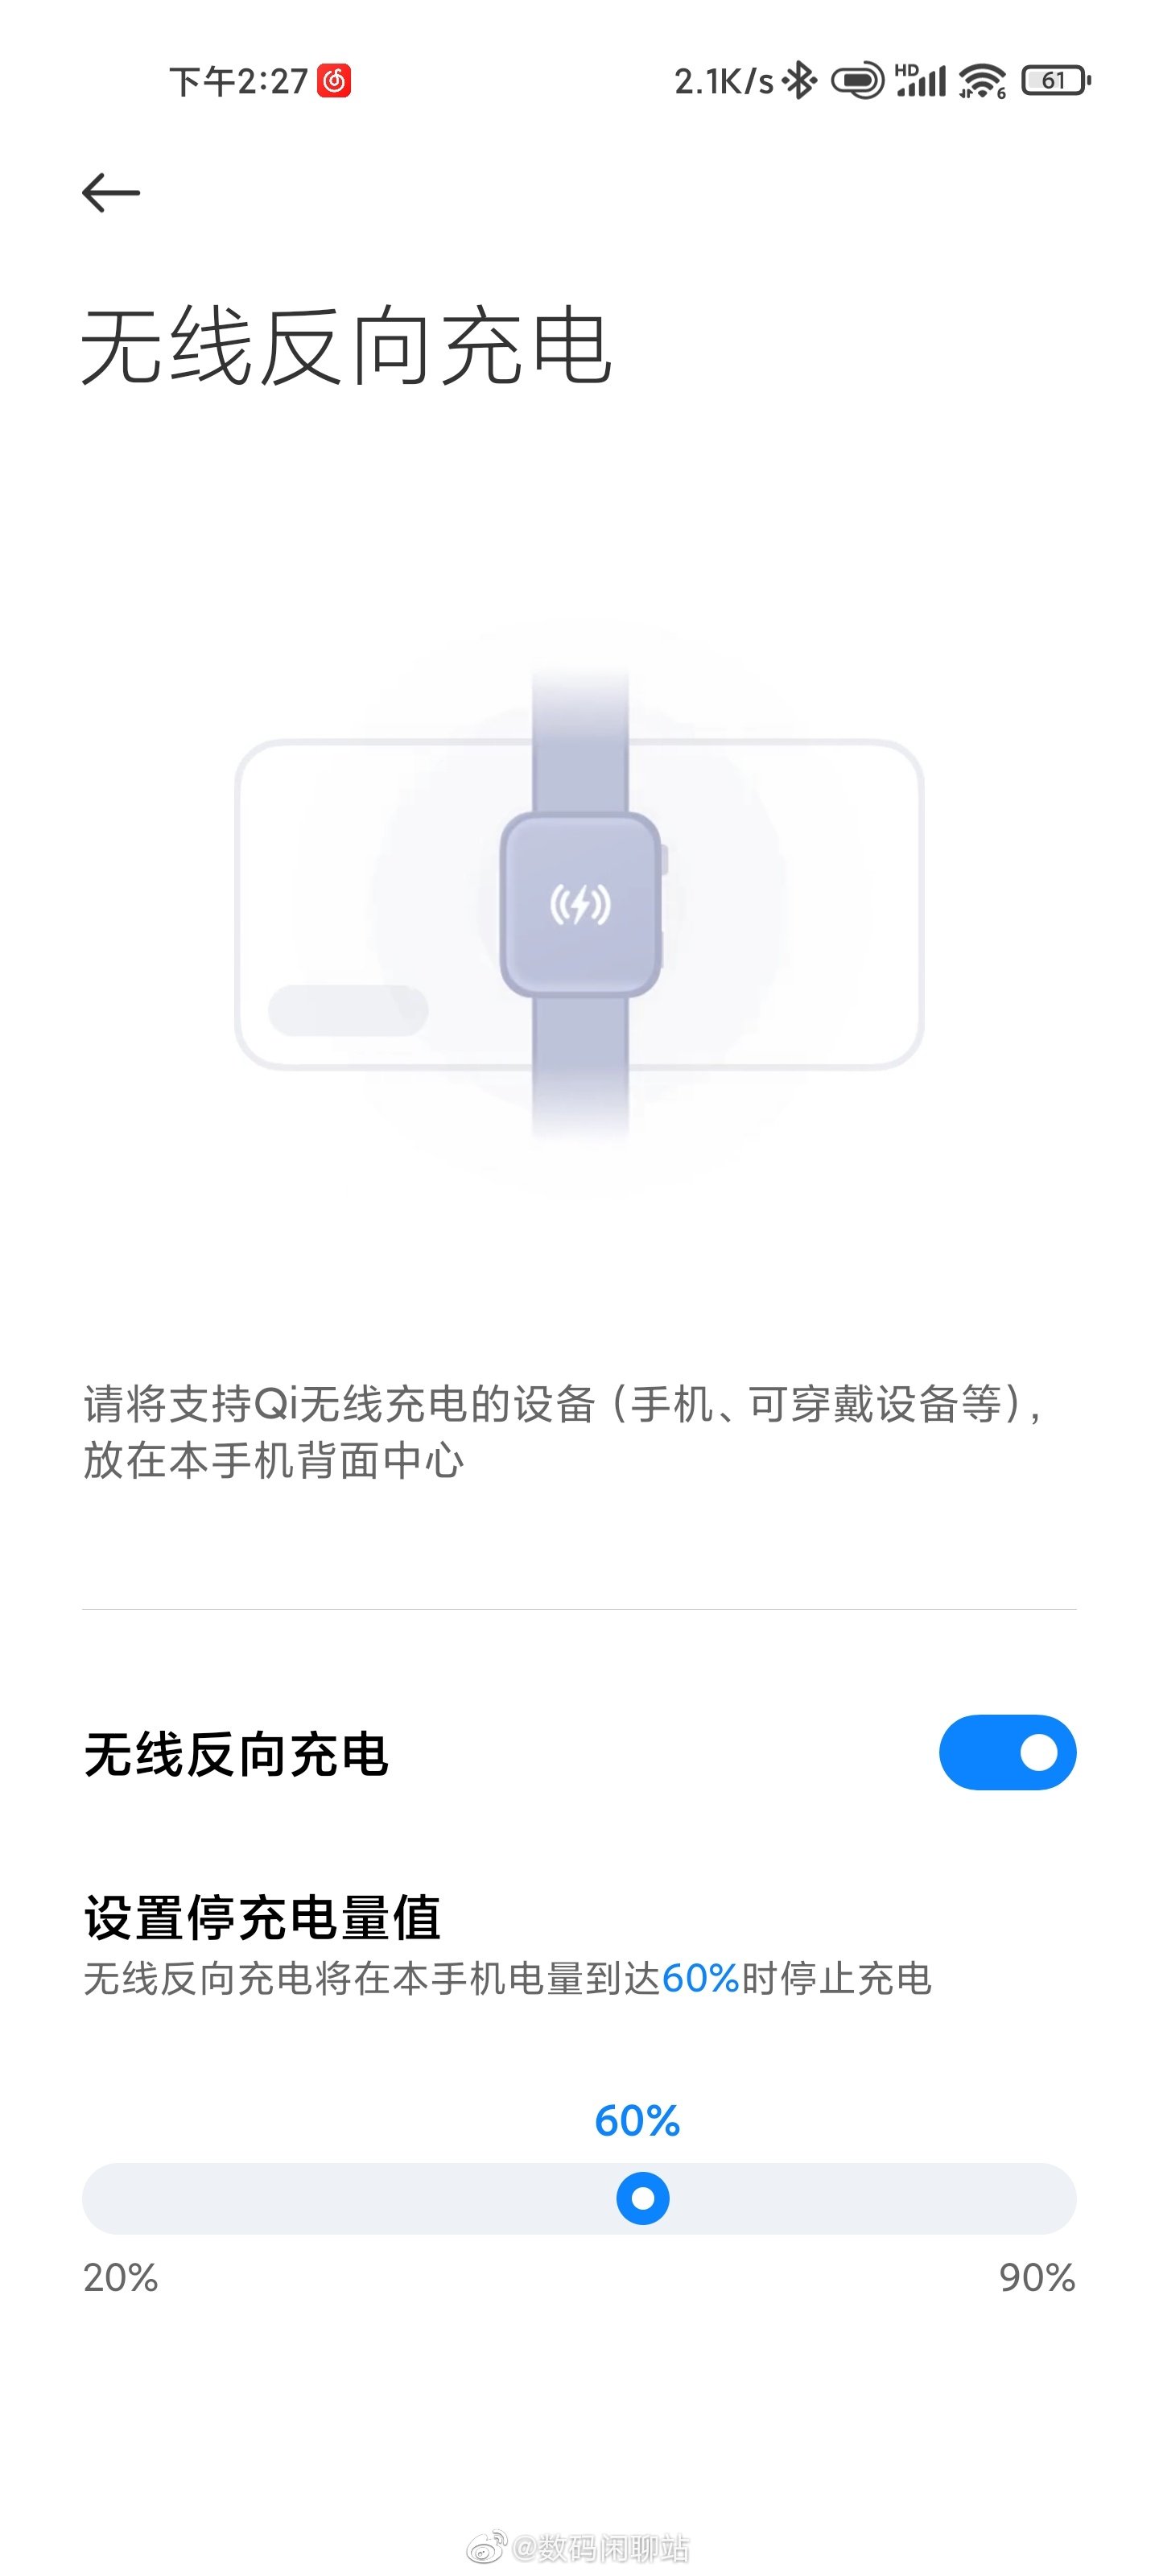 Xiaomi MI Watch with wireless charging in works